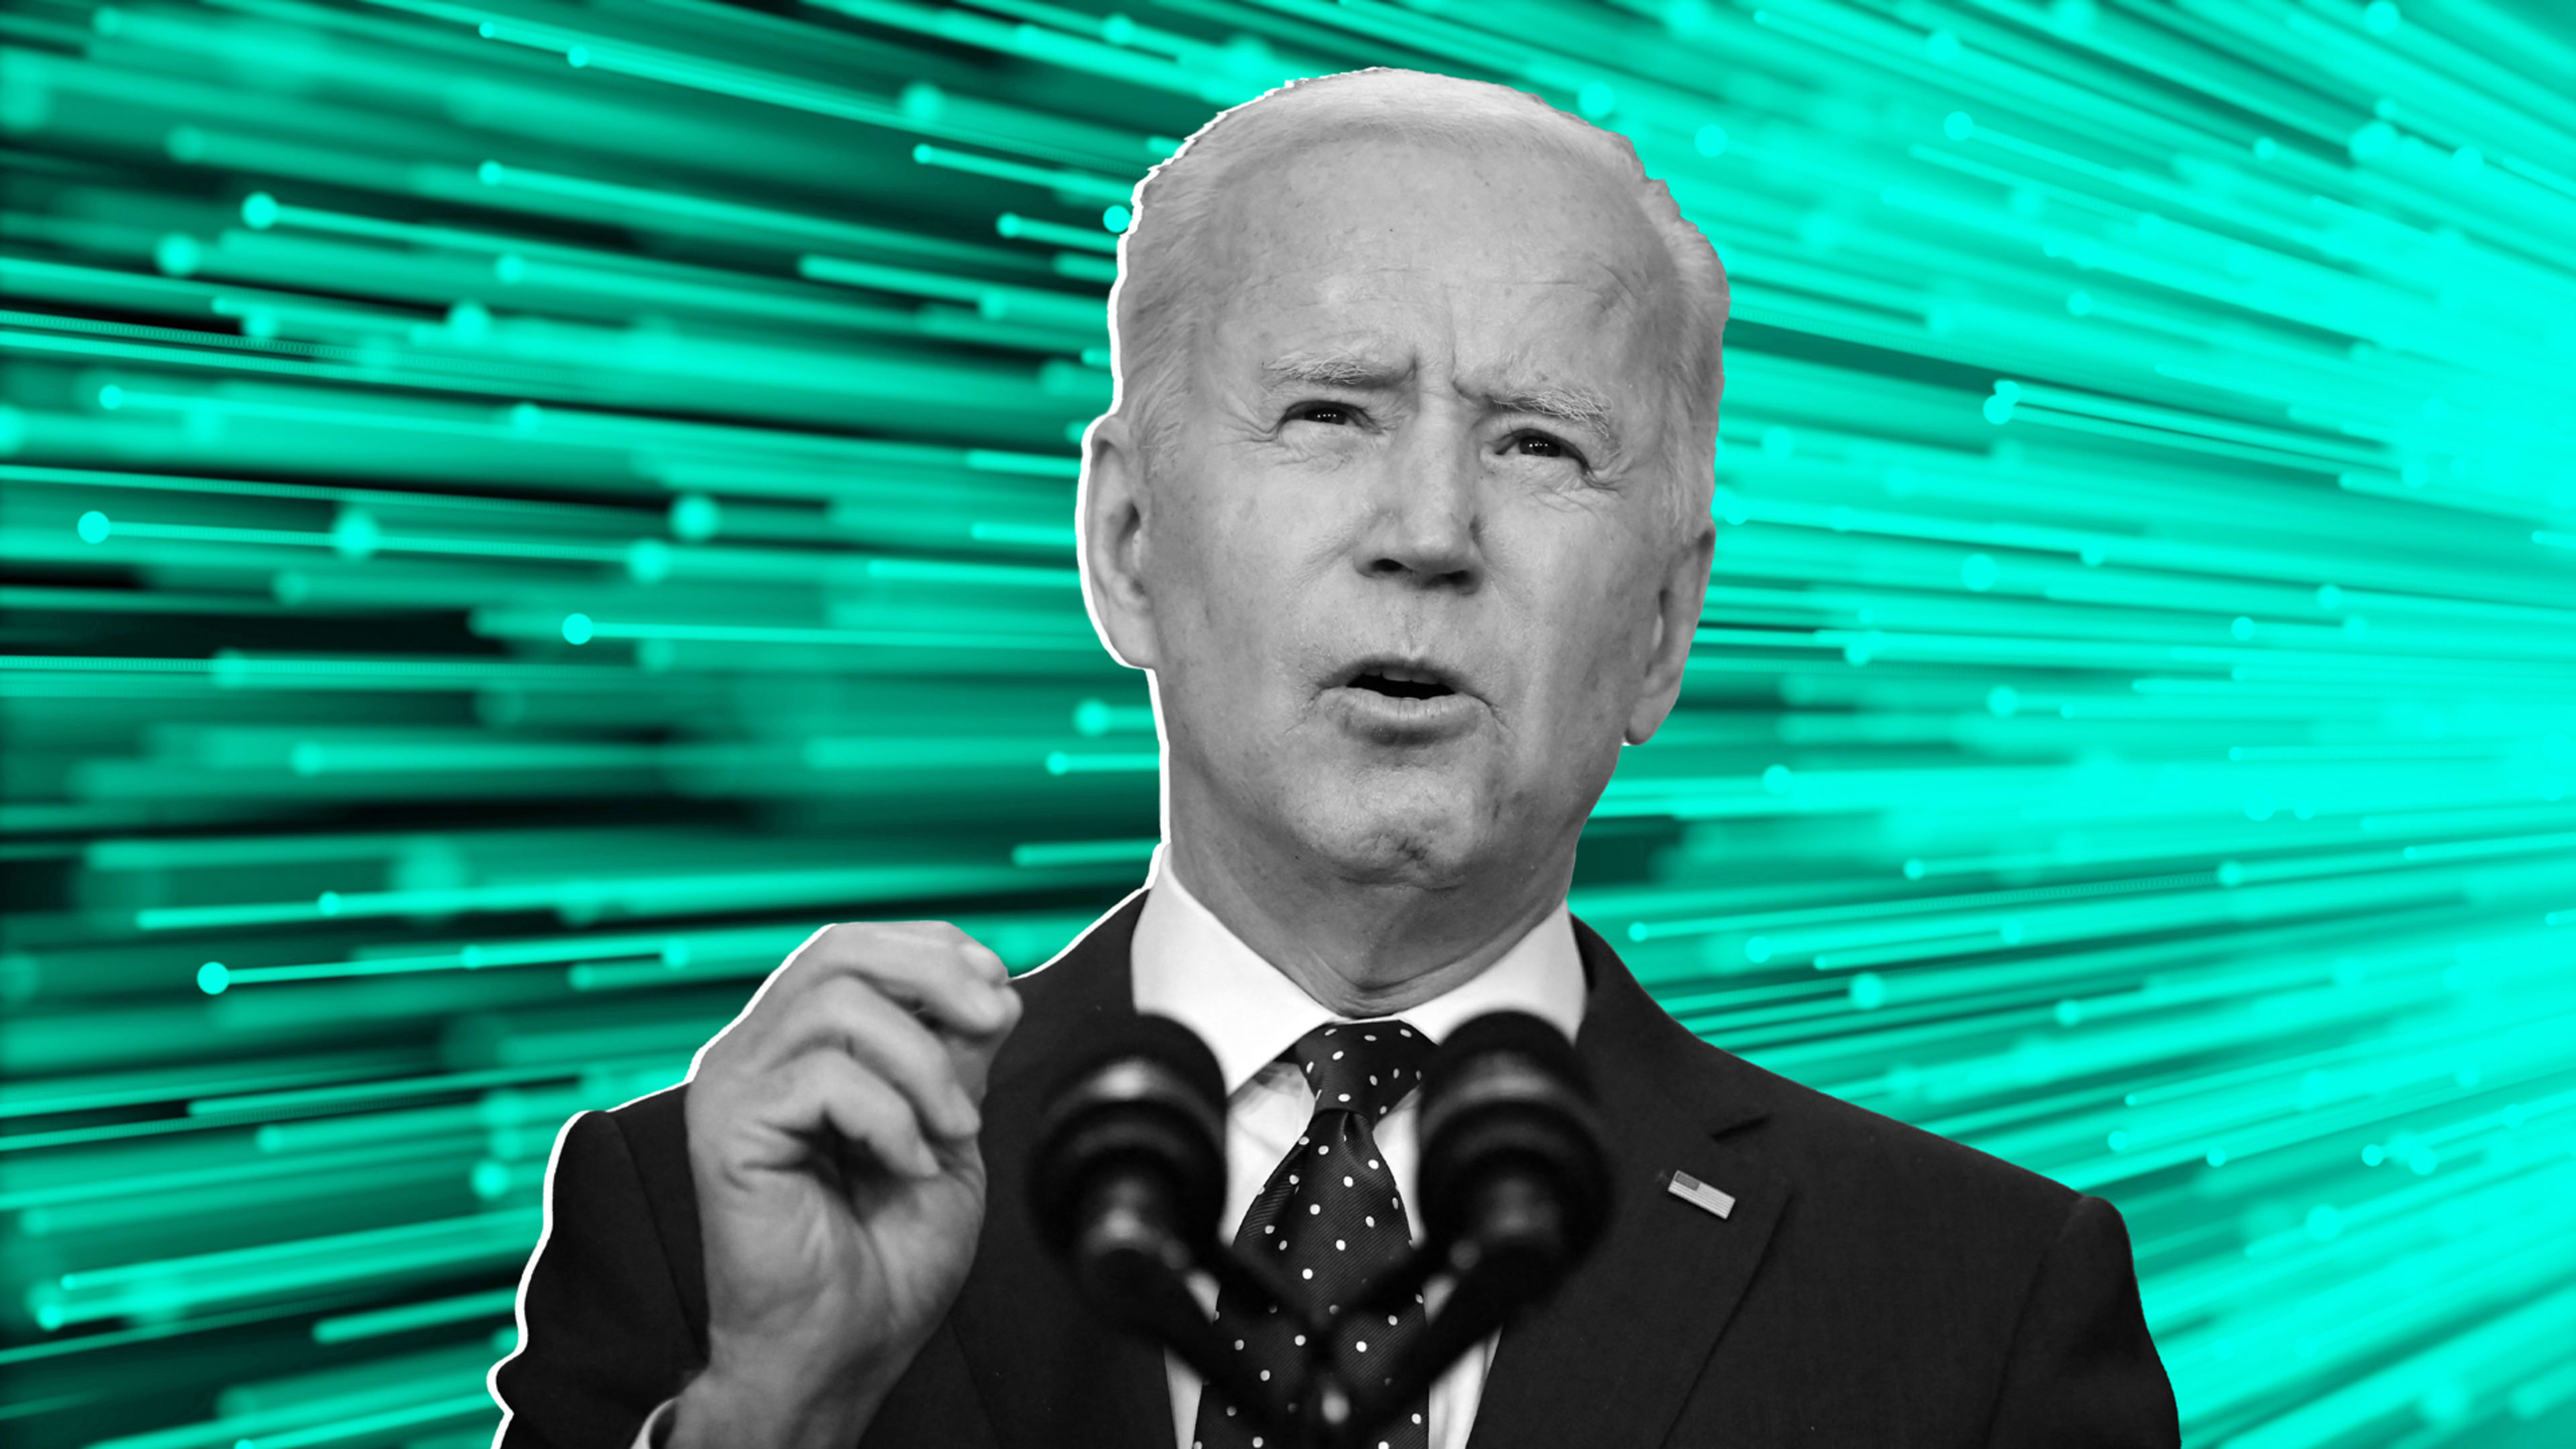 Biden’s infrastructure plan could transform broadband in the U.S.